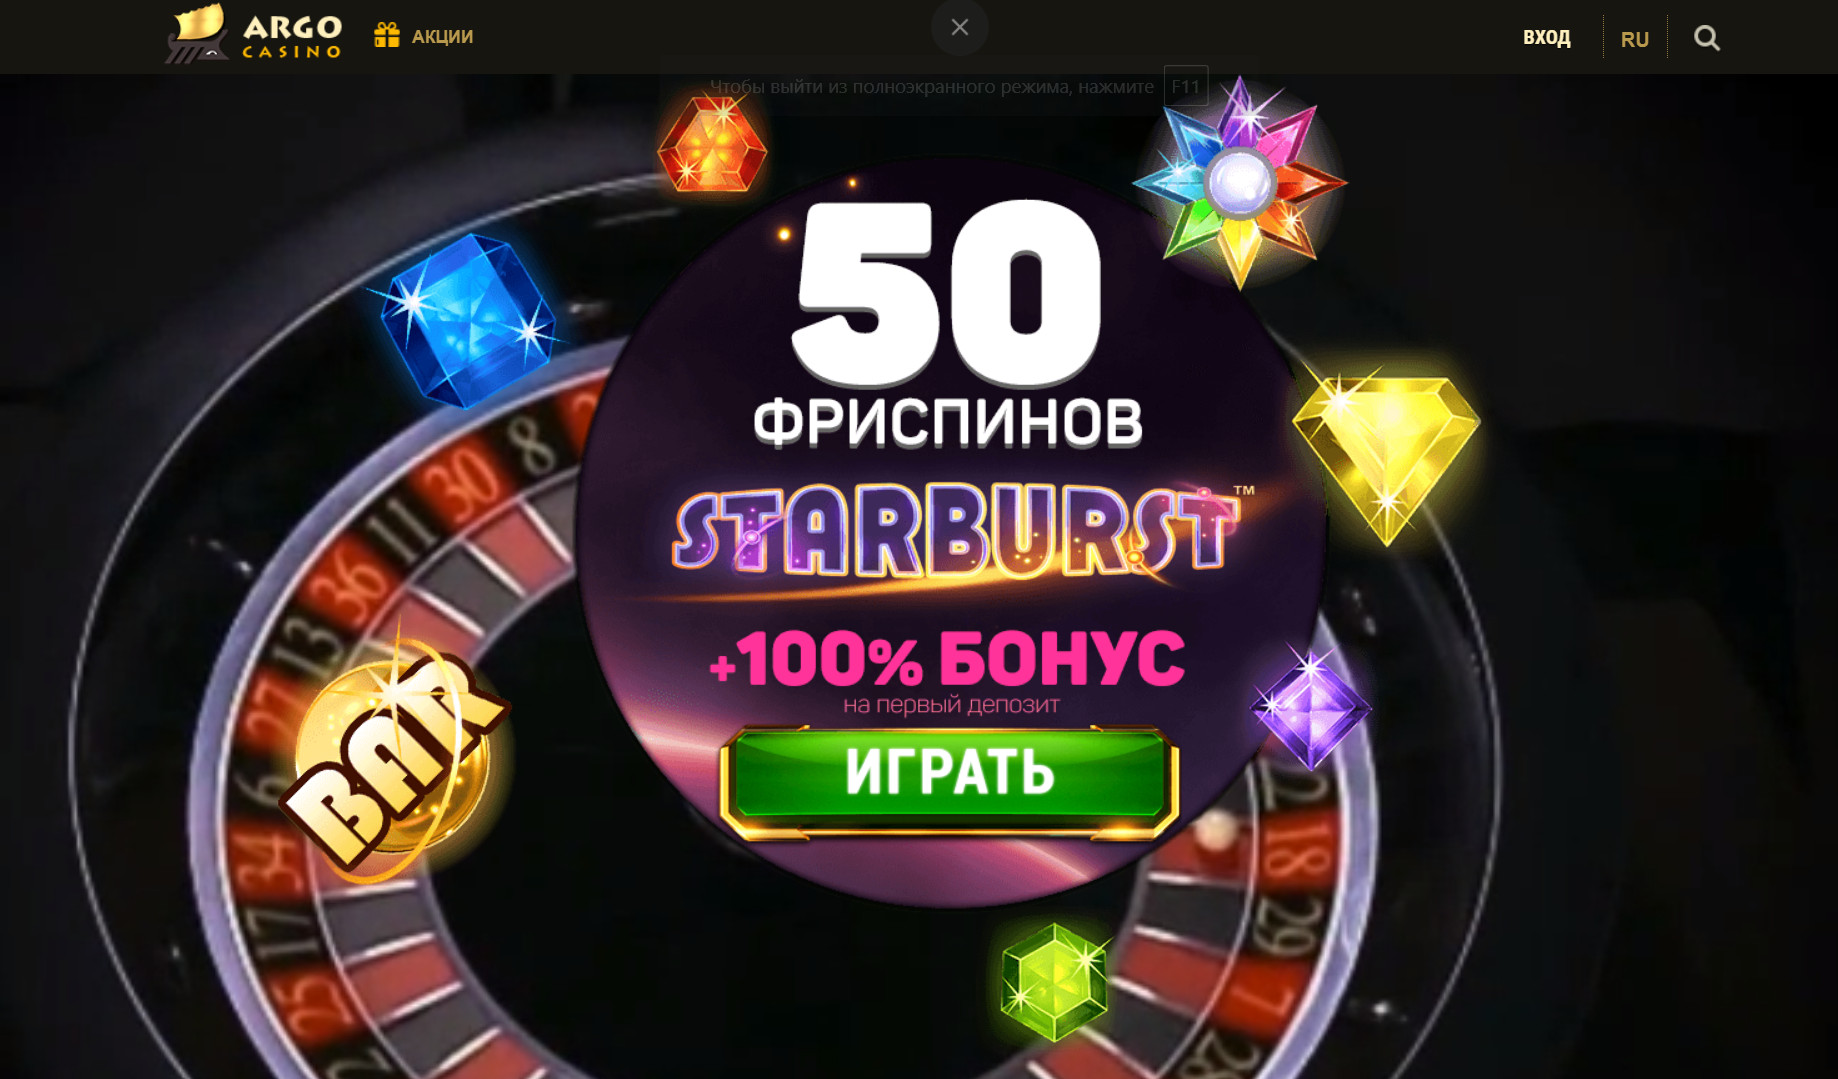 Бонус в казино арго казино баккара онлайн